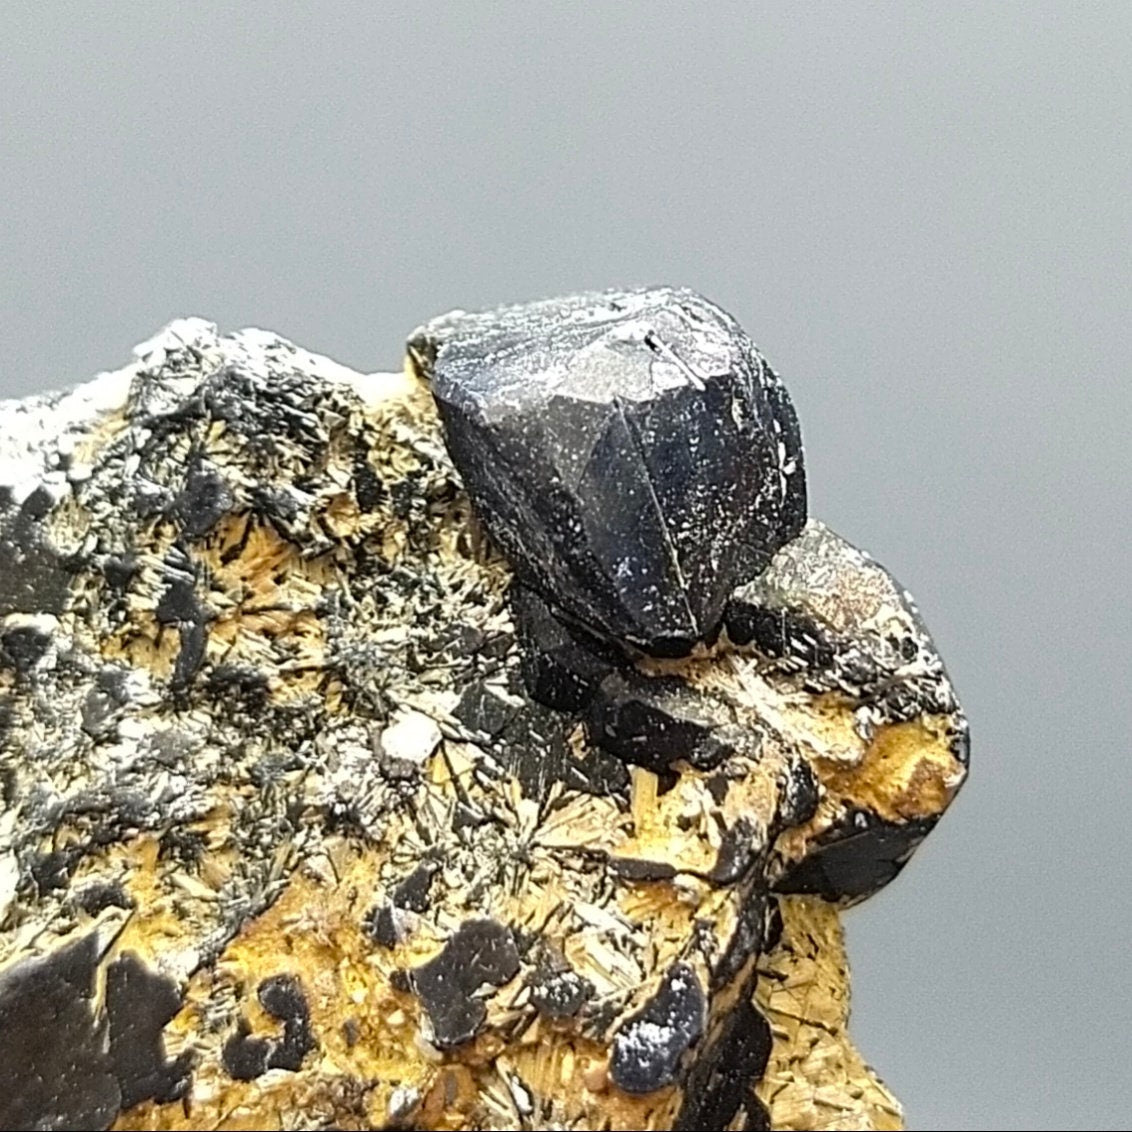 ARSAA GEMS AND MINERALSSagenite var Rutile irredecent beautiful crystal with on matrix hematite from Zagi mountain KP Pakistan, 21.2 grams - Premium  from ARSAA GEMS AND MINERALS - Just $60.00! Shop now at ARSAA GEMS AND MINERALS